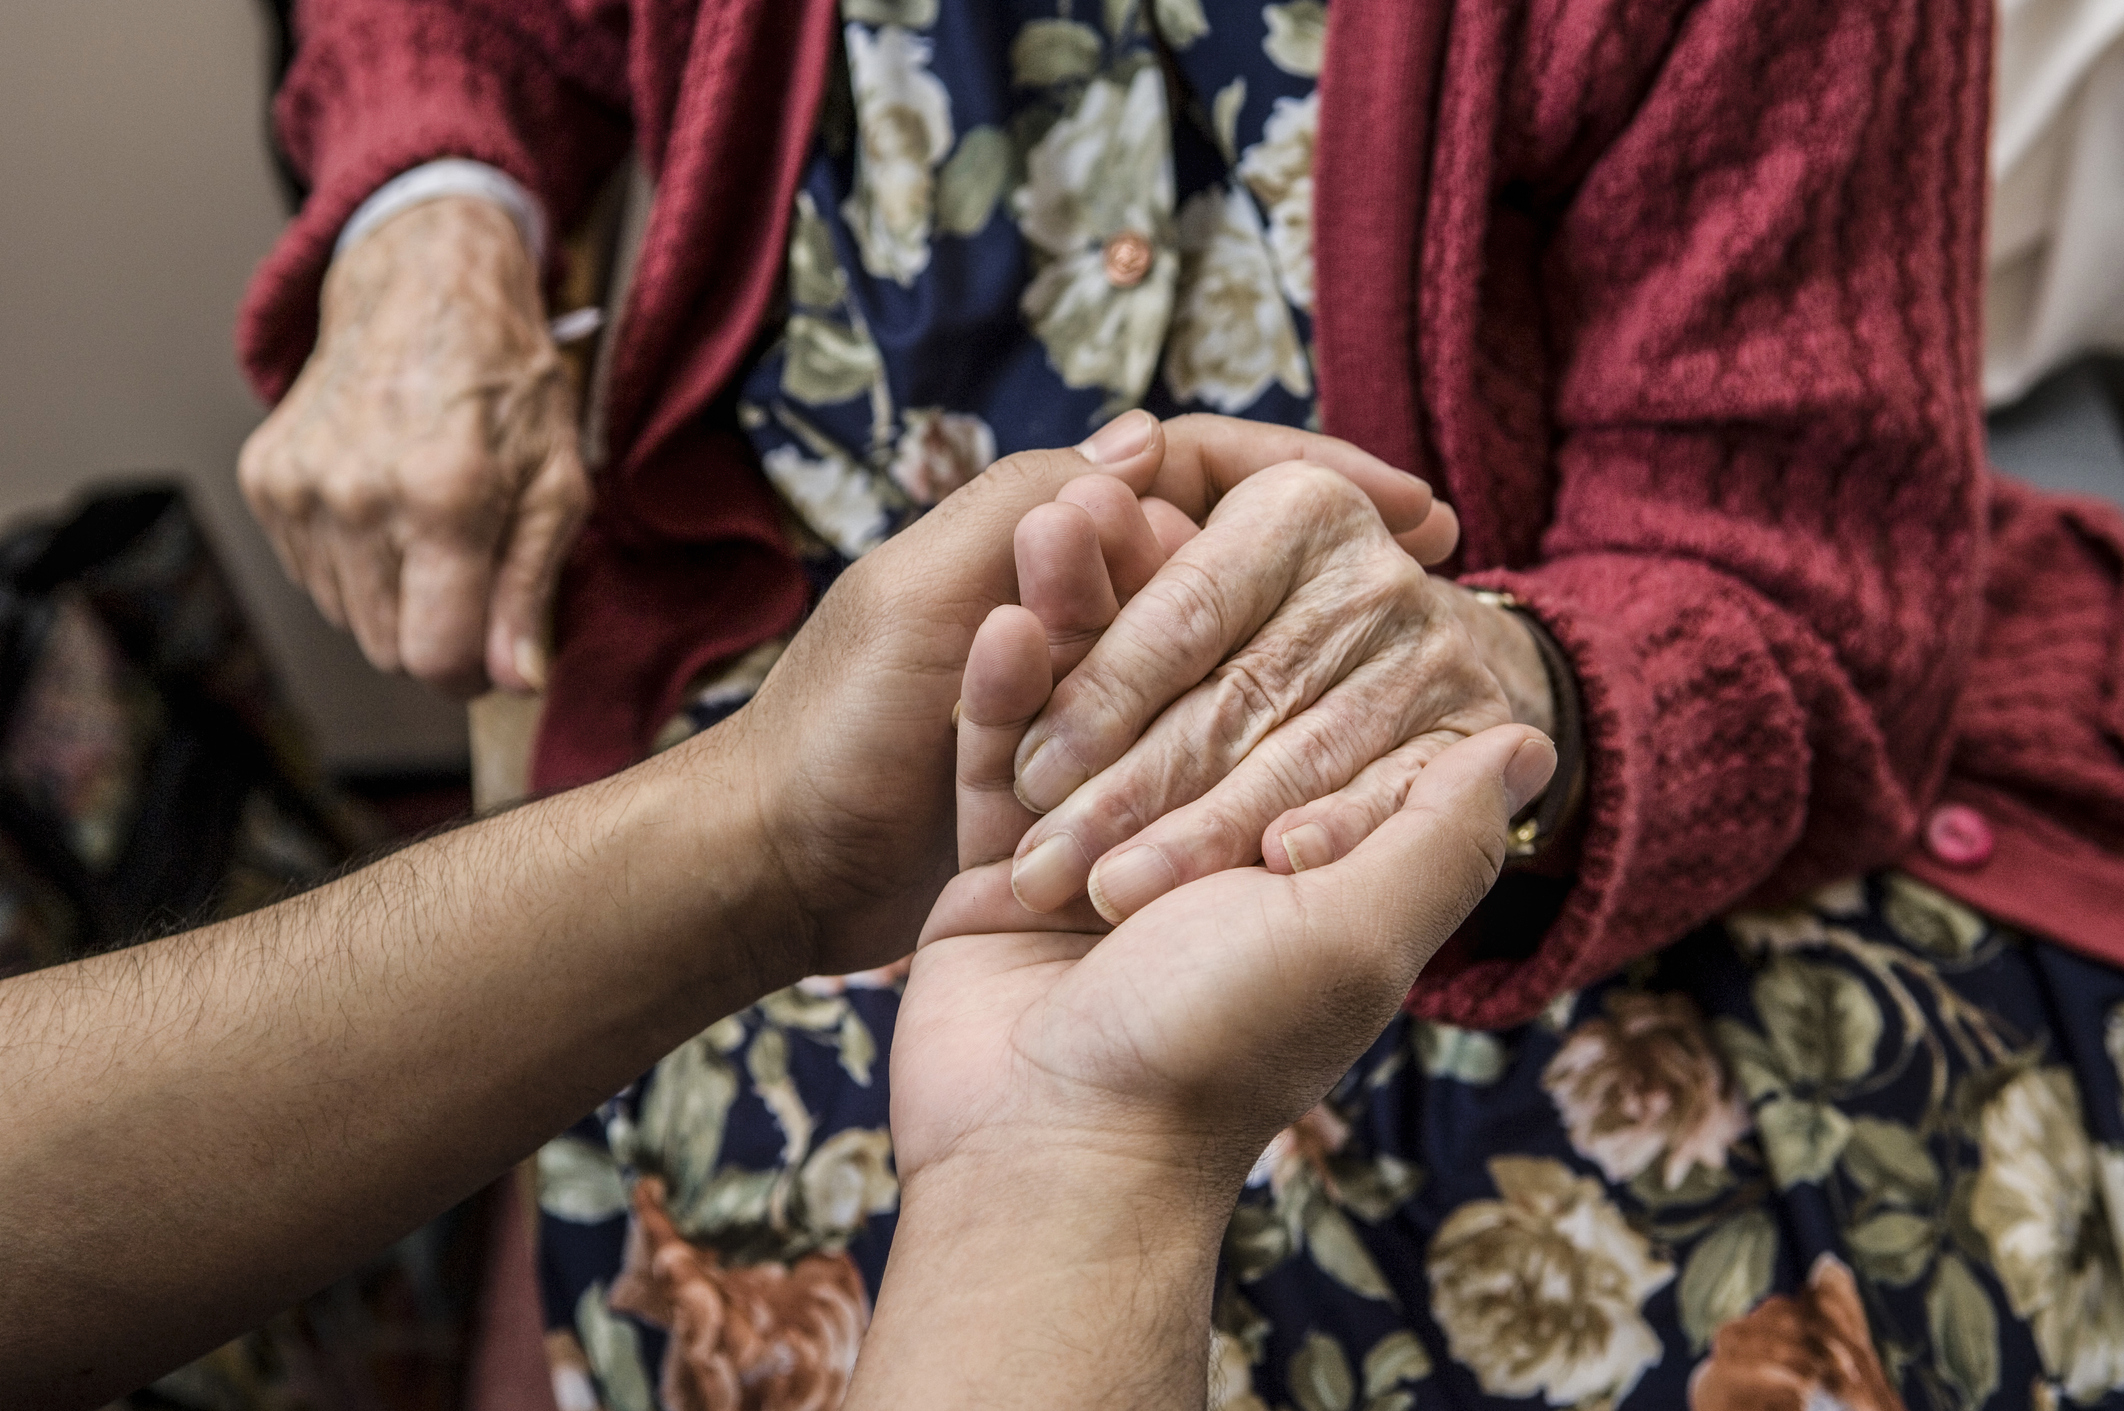 Nurse holding hands with elderly patient.